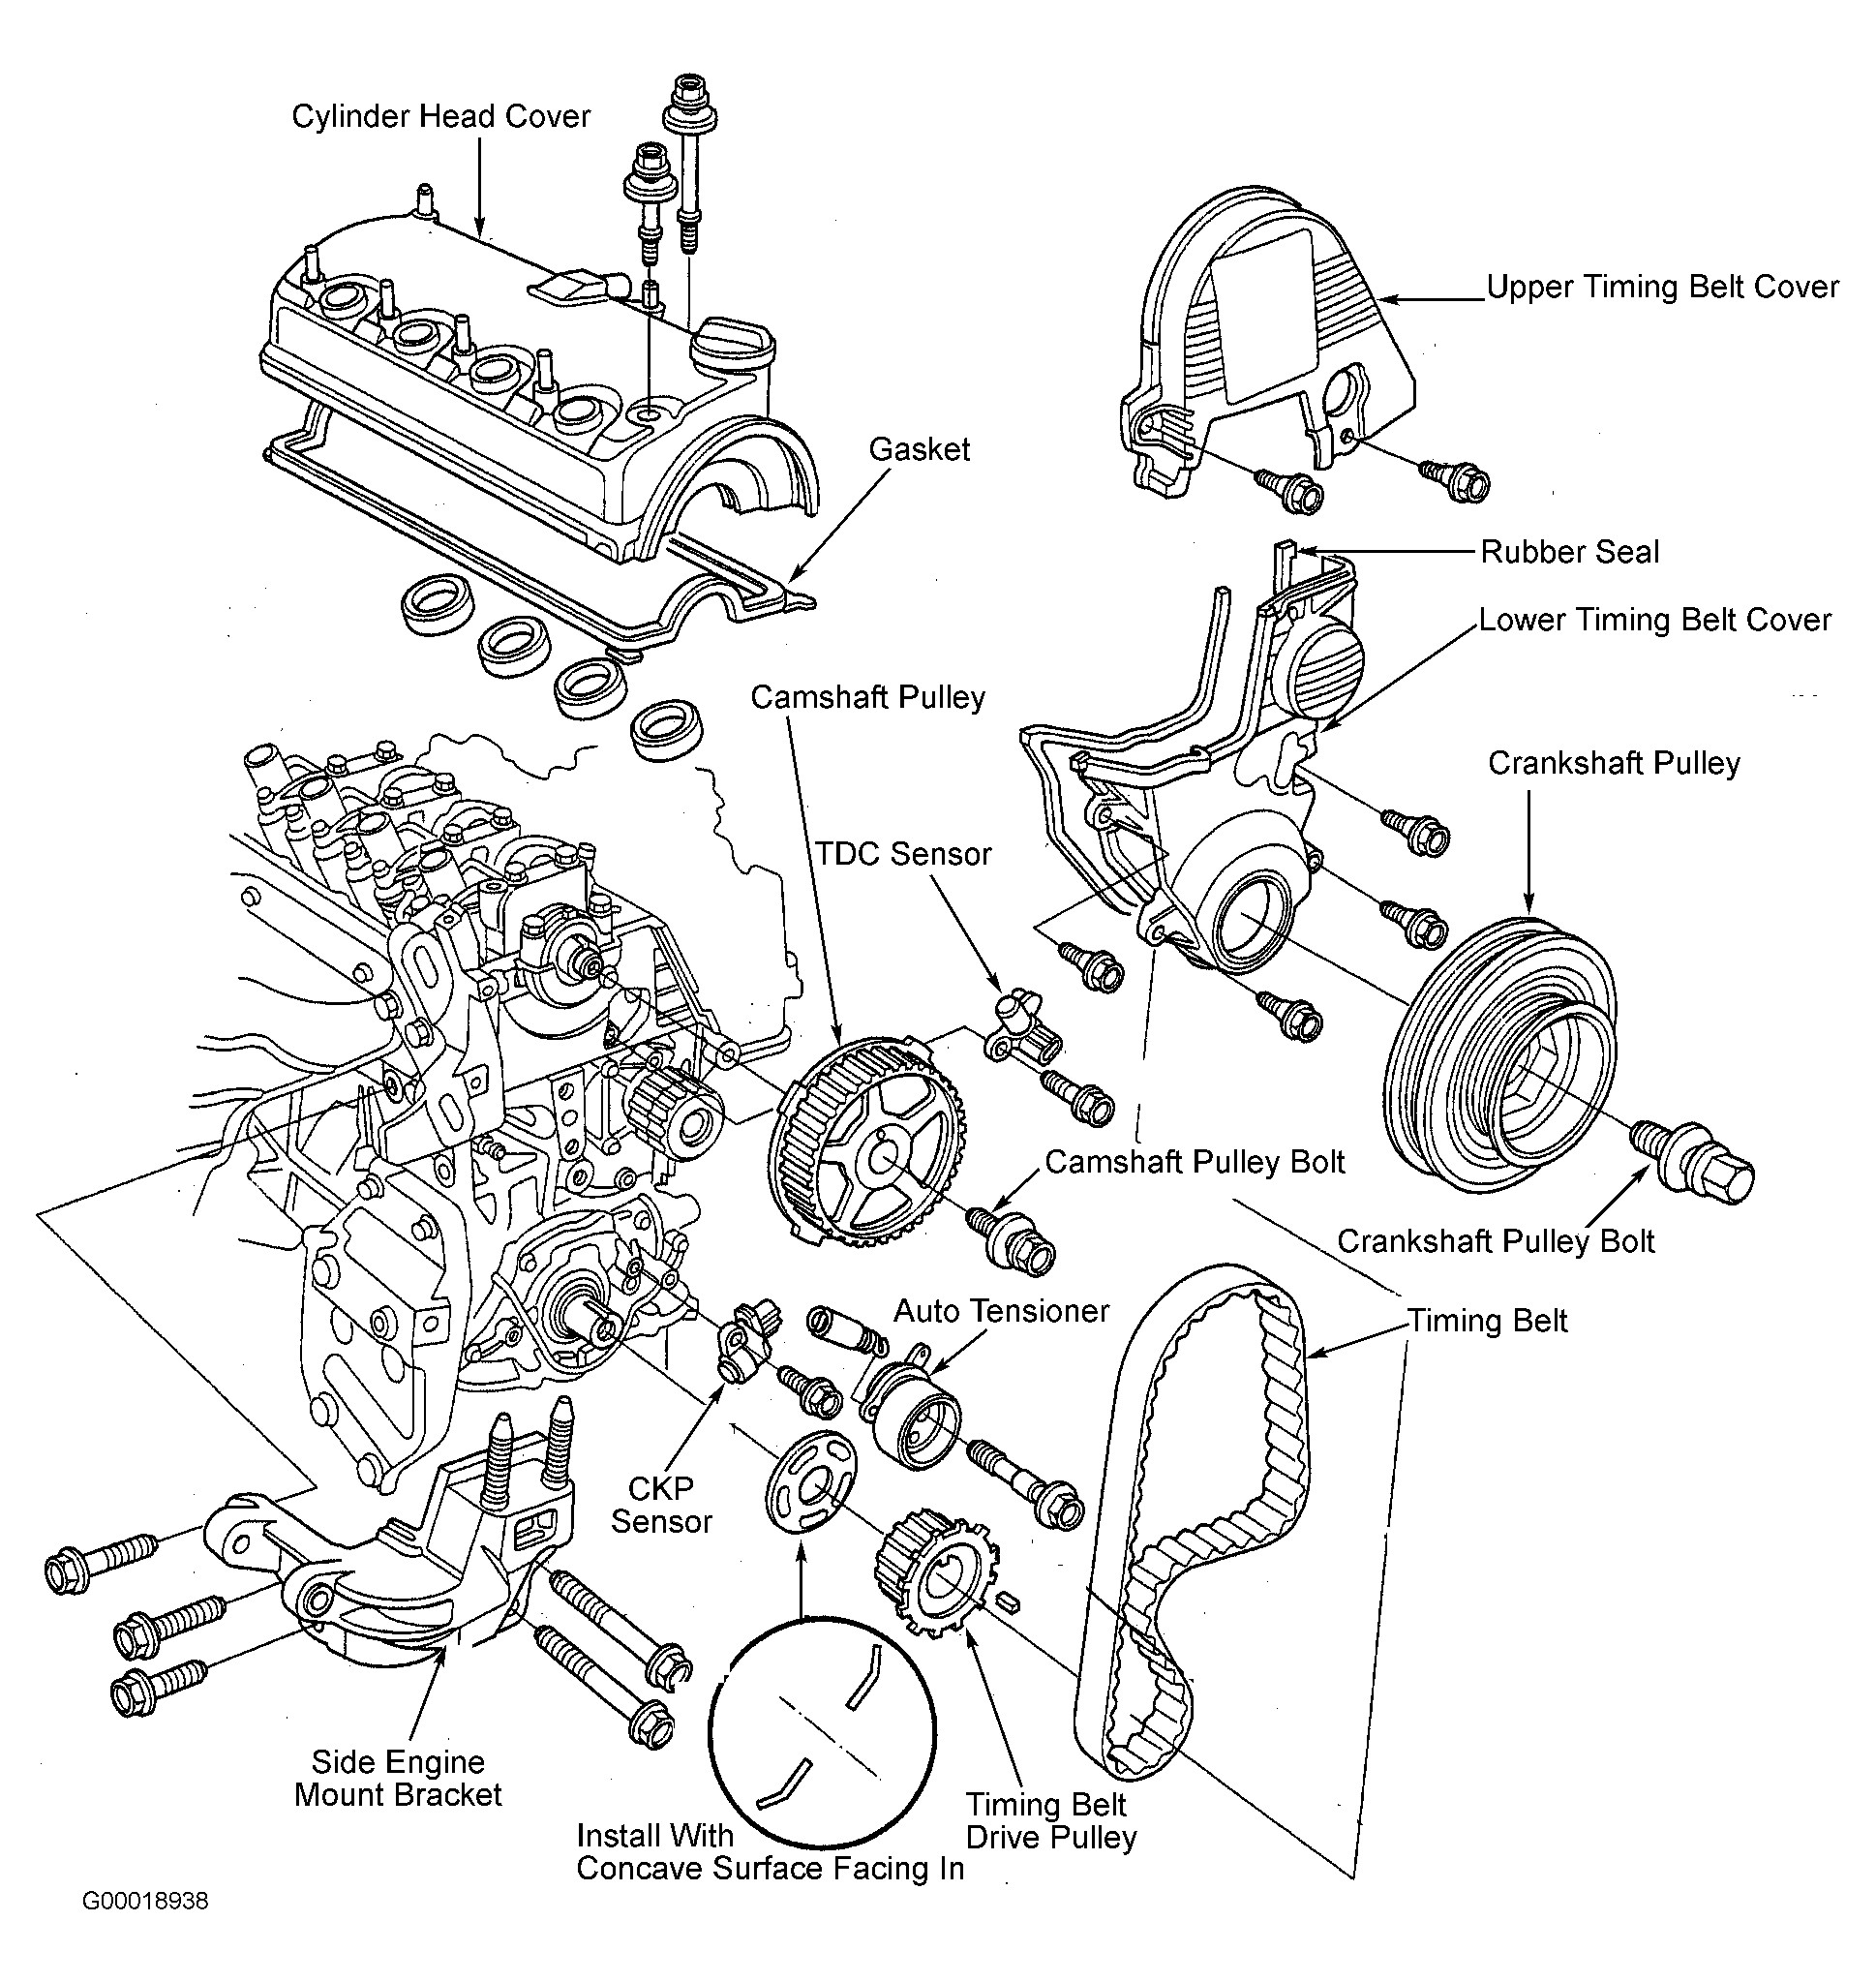 Engine Parts Diagram Honda Civic Parts Diagram Wonderful Likeness Serpentine and Timing Of Engine Parts Diagram